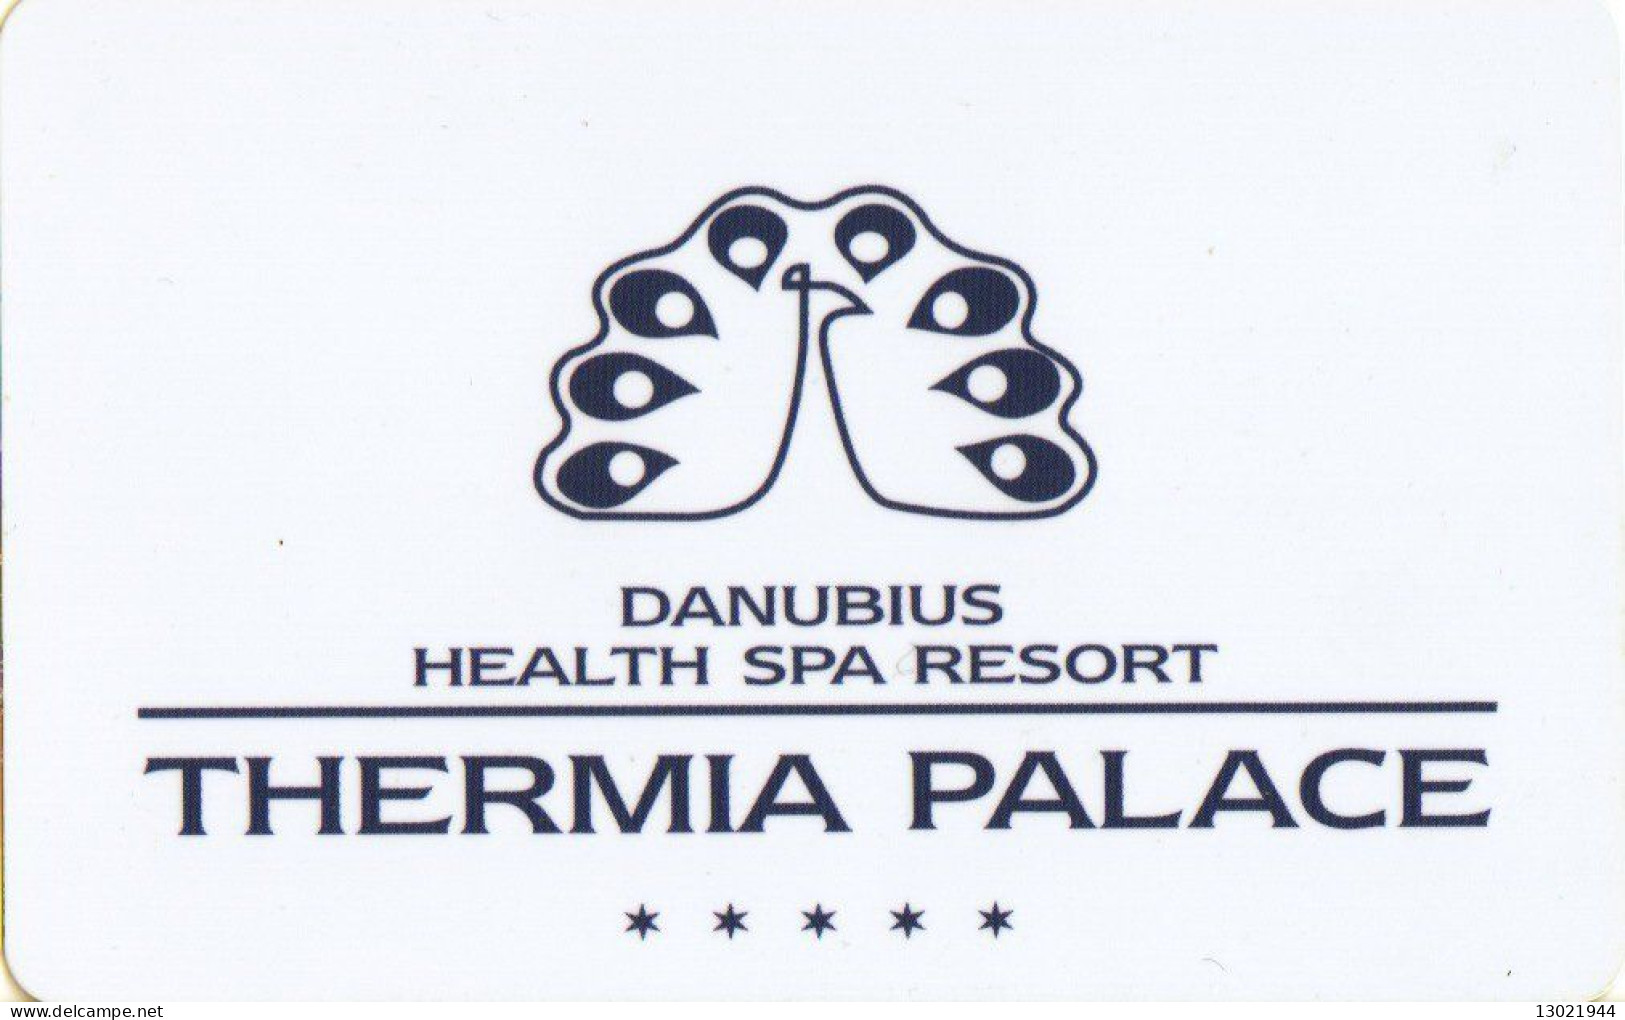 SLOVACCHIA  KEY HOTEL  Danubius Health Spa Resort Thermia Palace ***** -     Piestany - Hotel Keycards